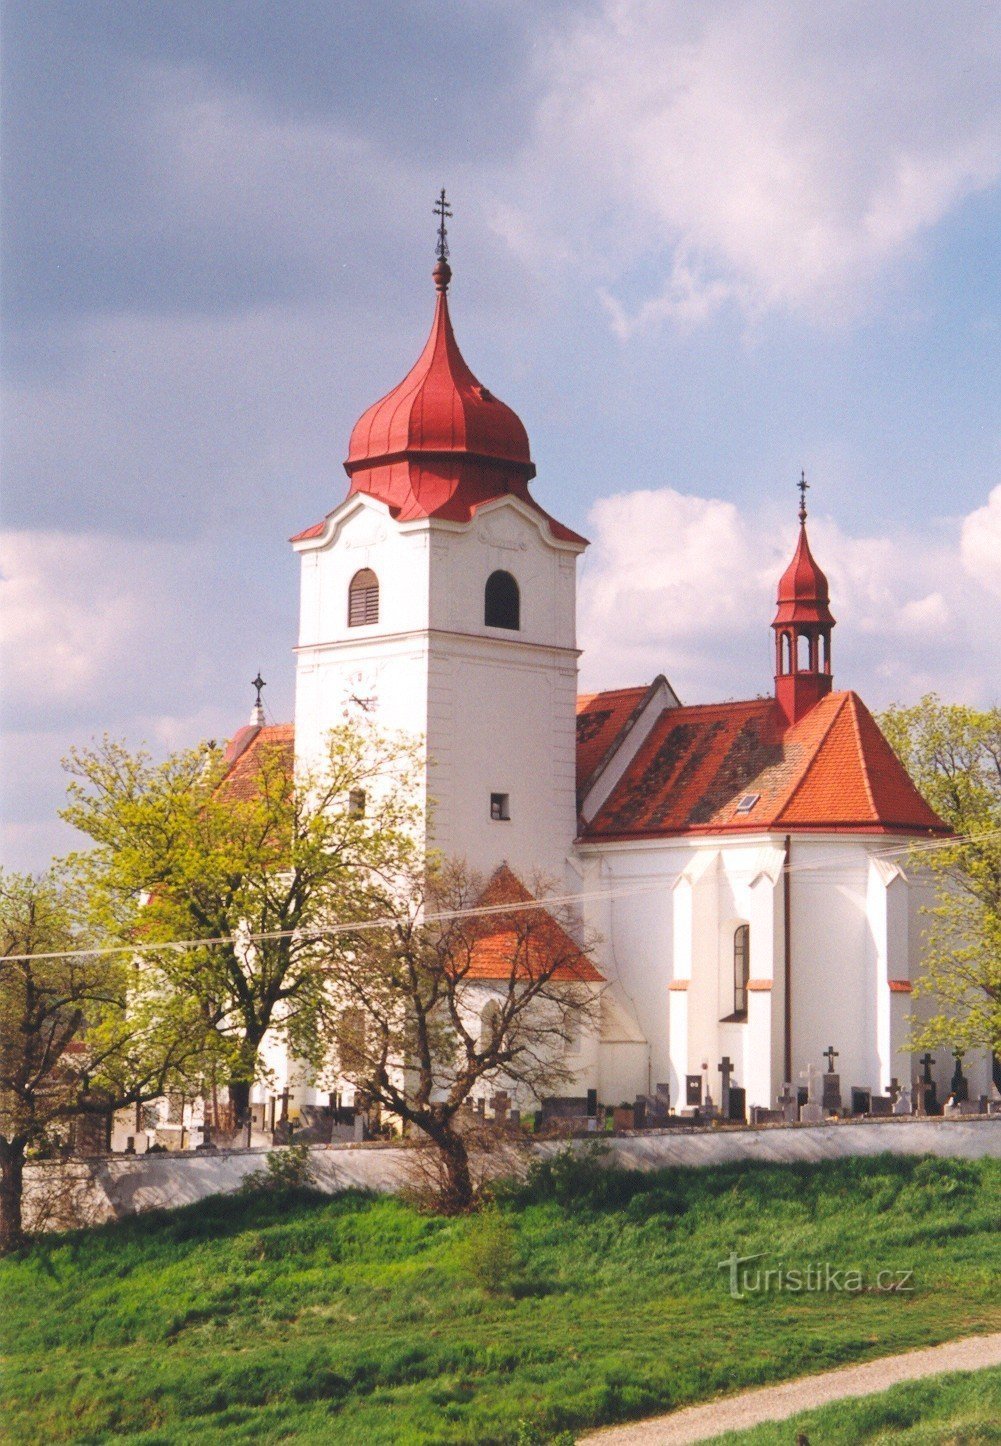 Trstěnice - Igreja da Ascensão de St. Crise